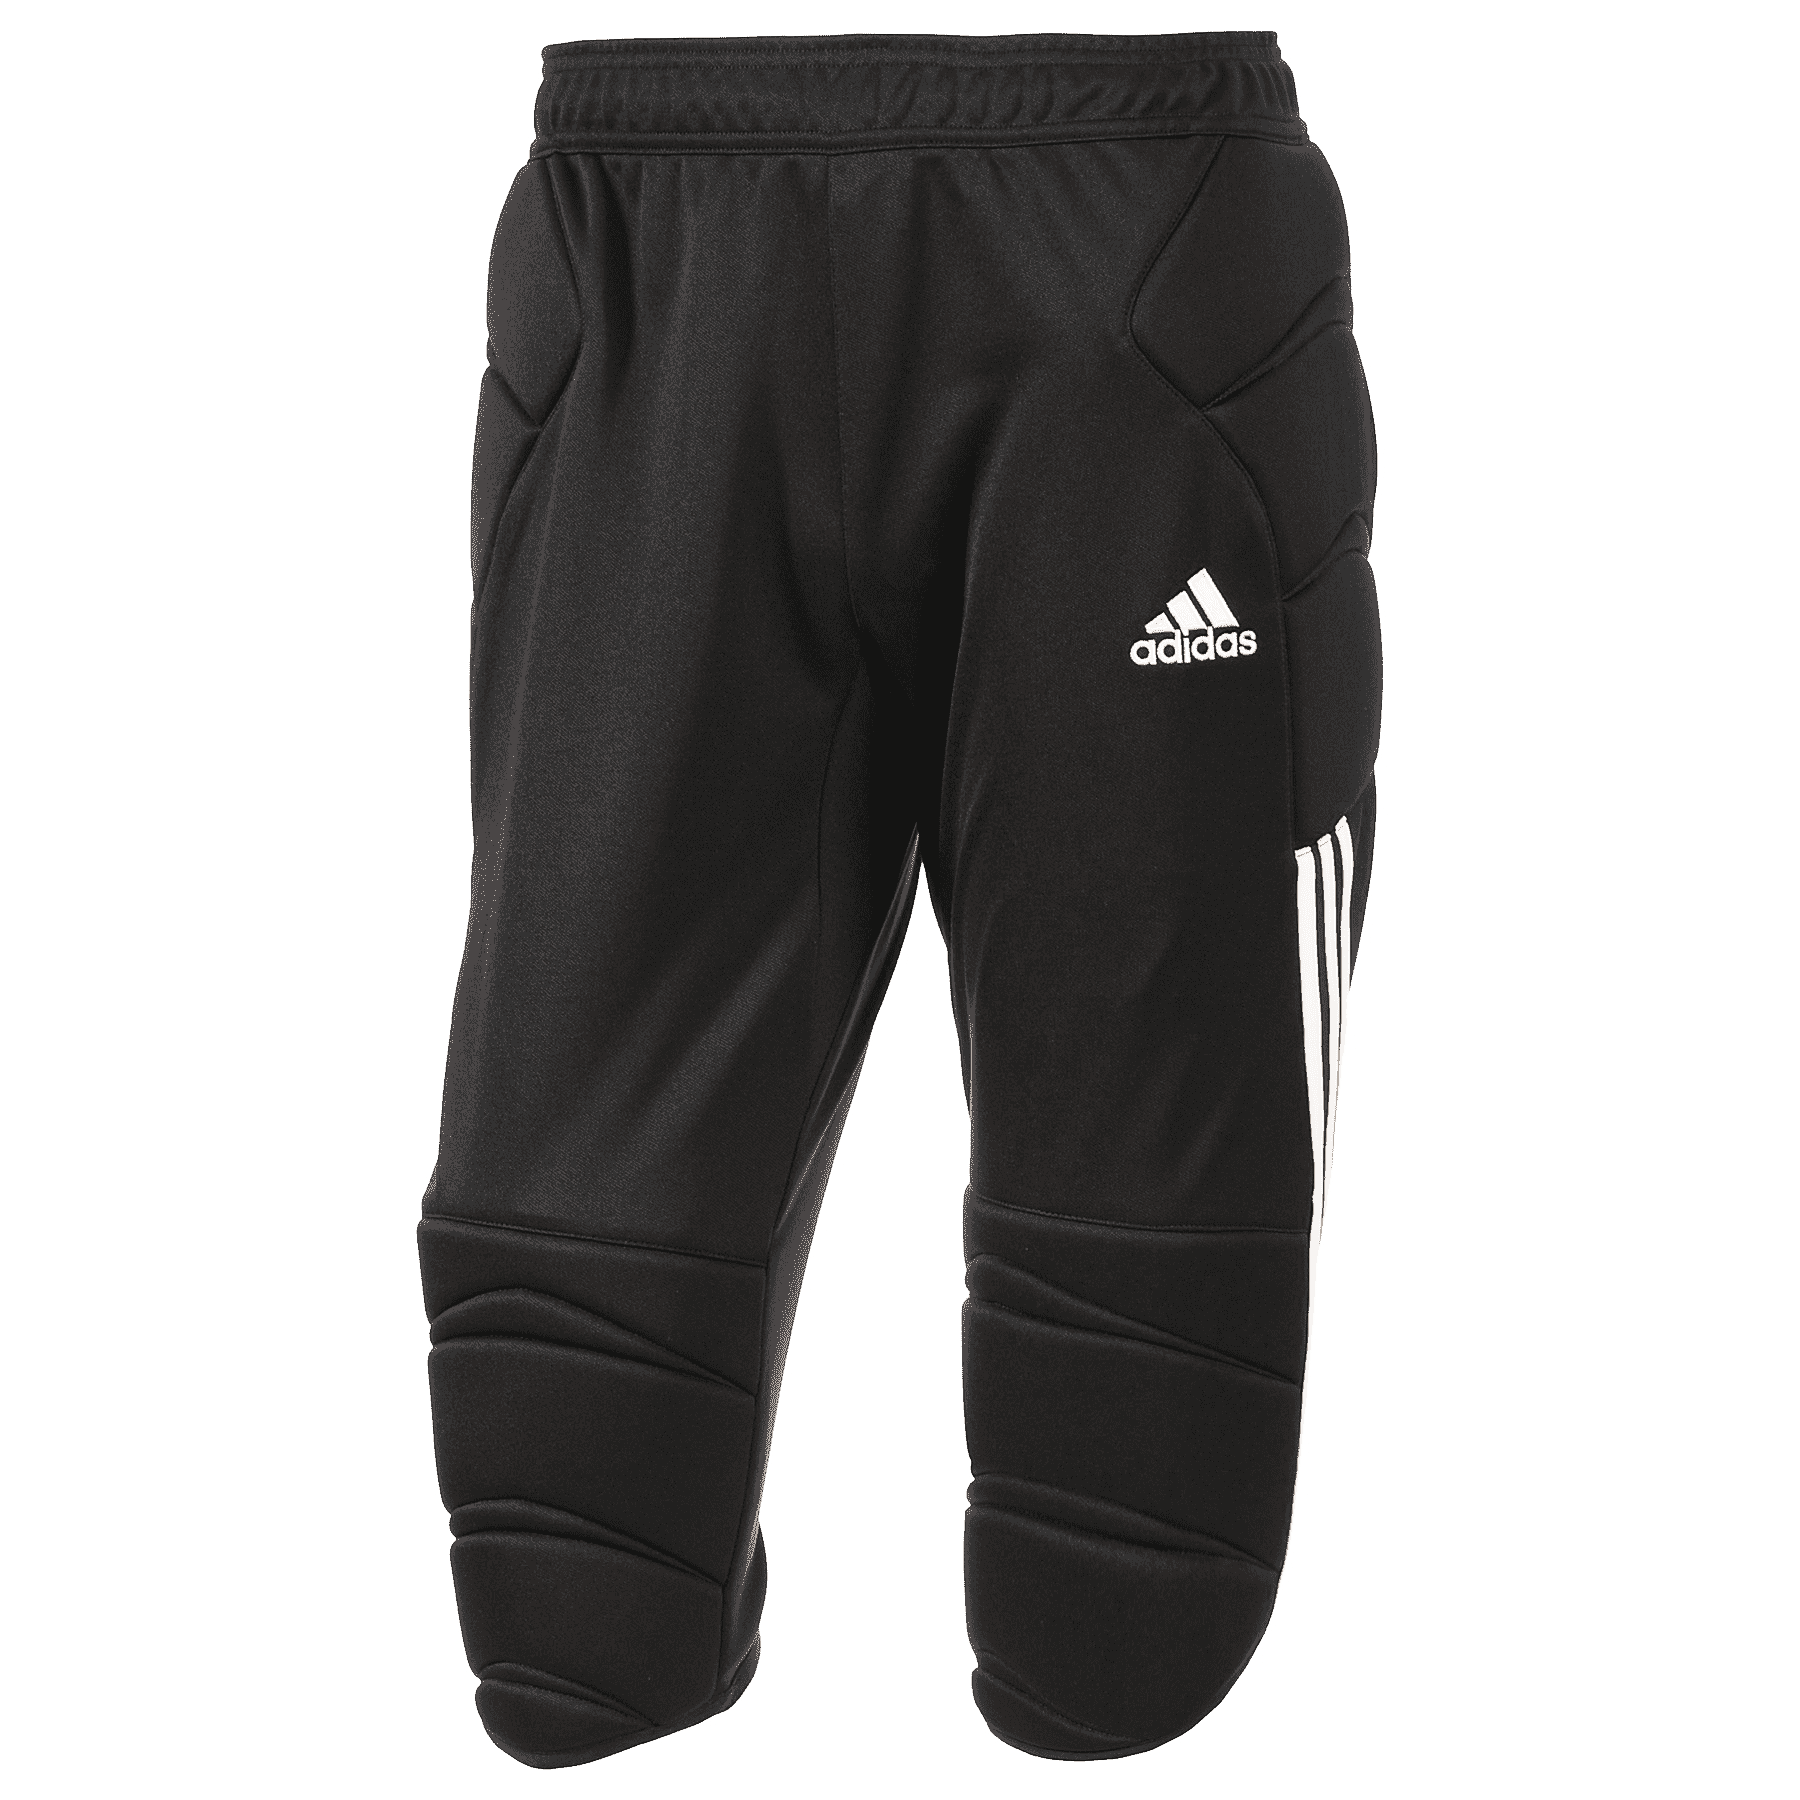 adidas tierro 13 goalkeeper shorts